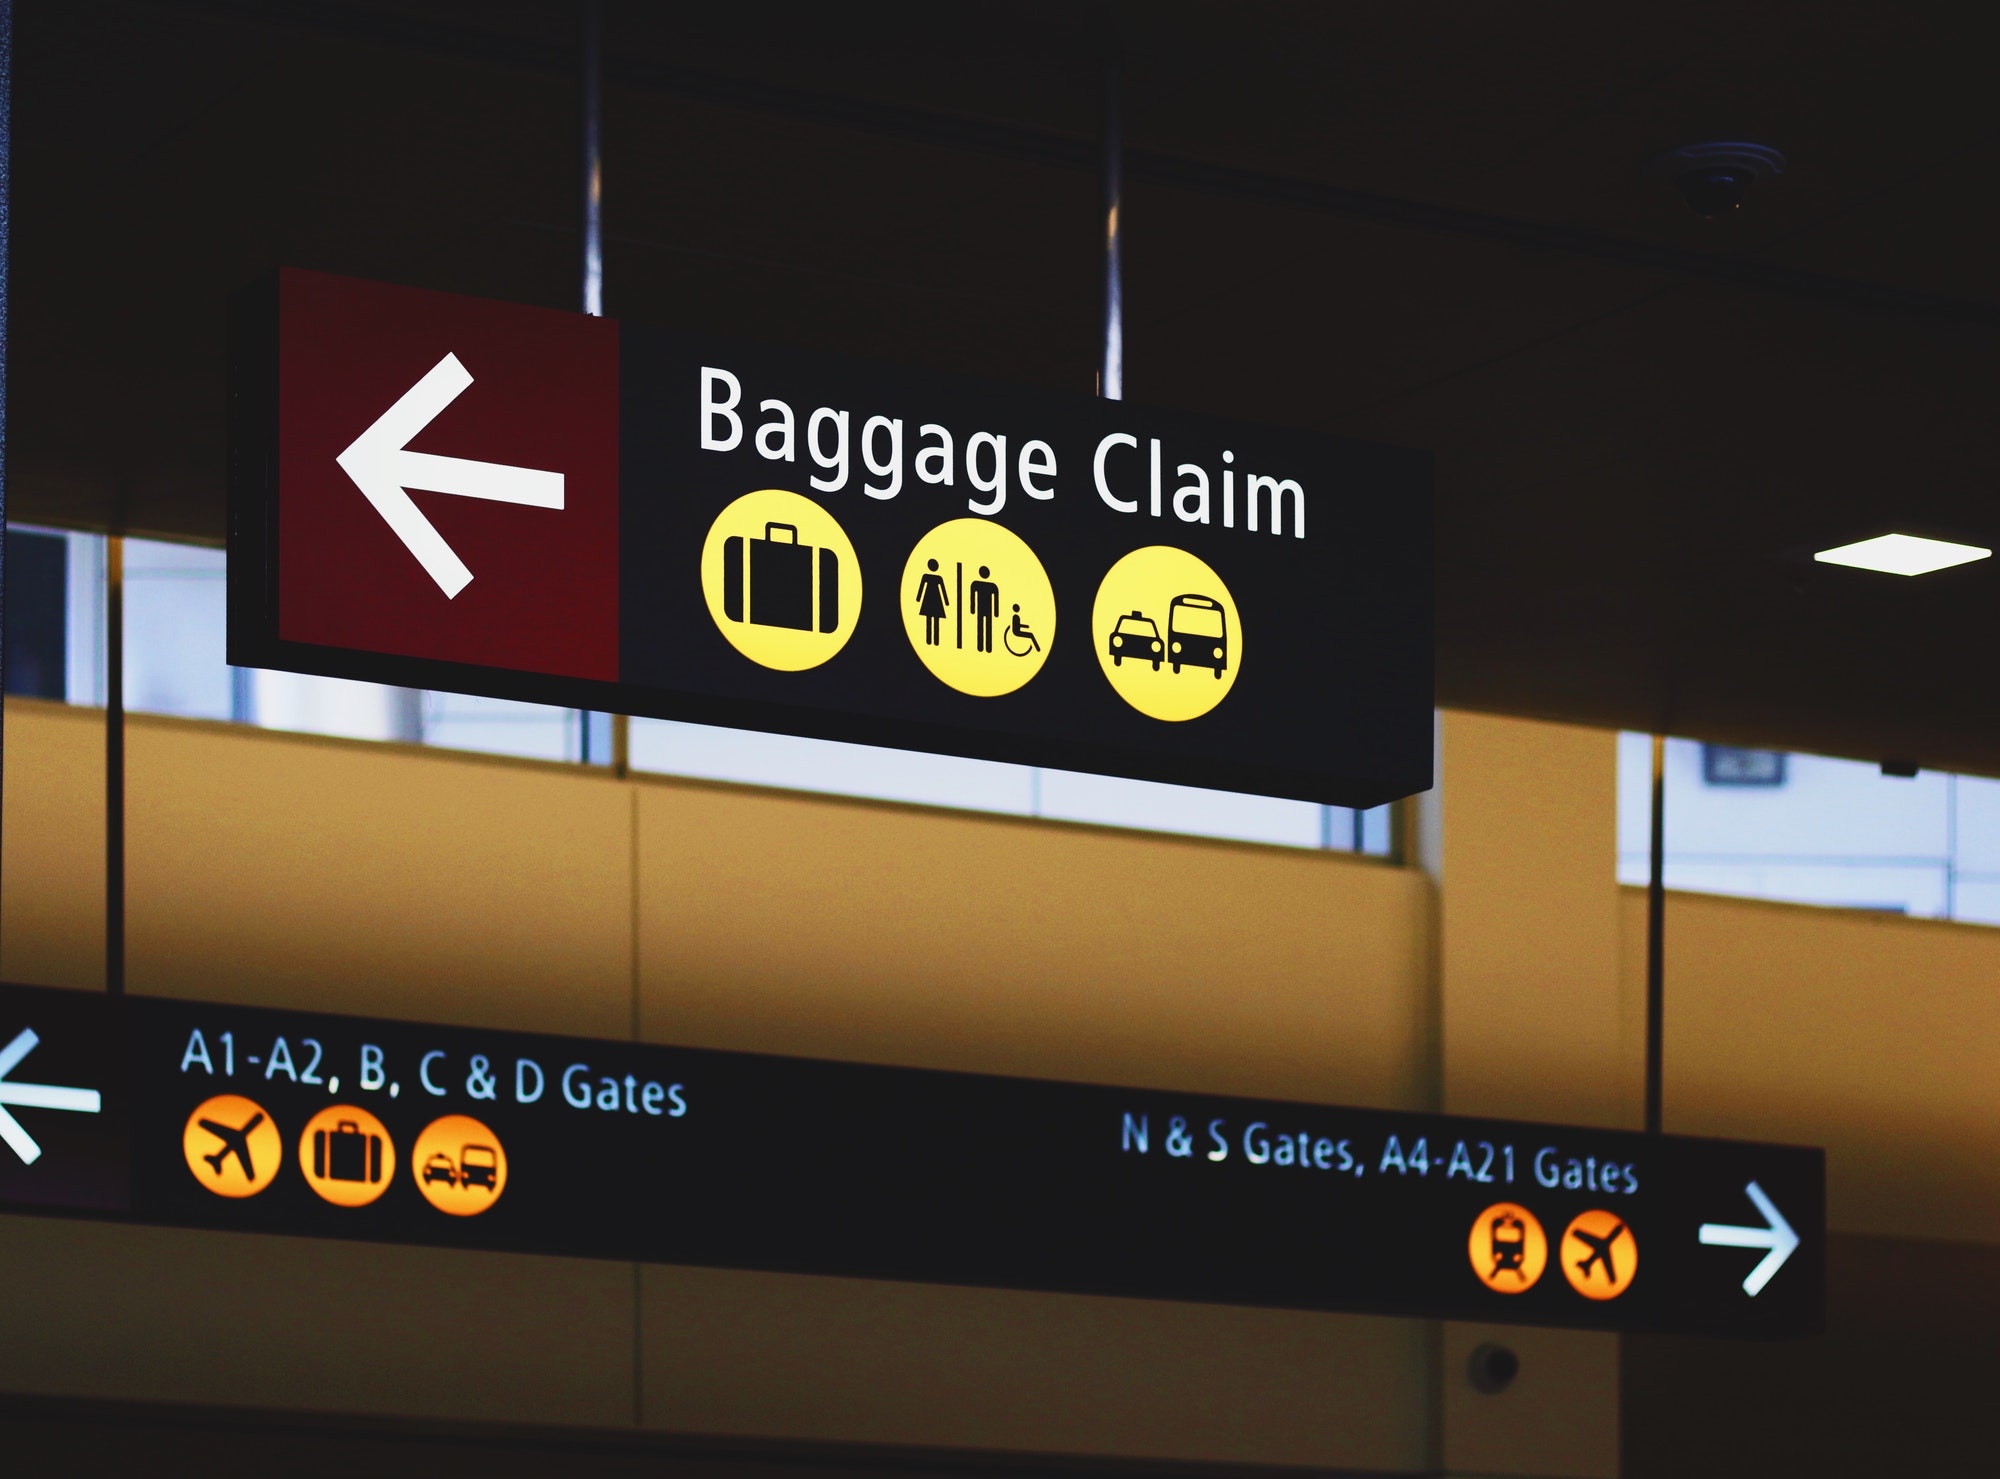 Baggage claim area at airport